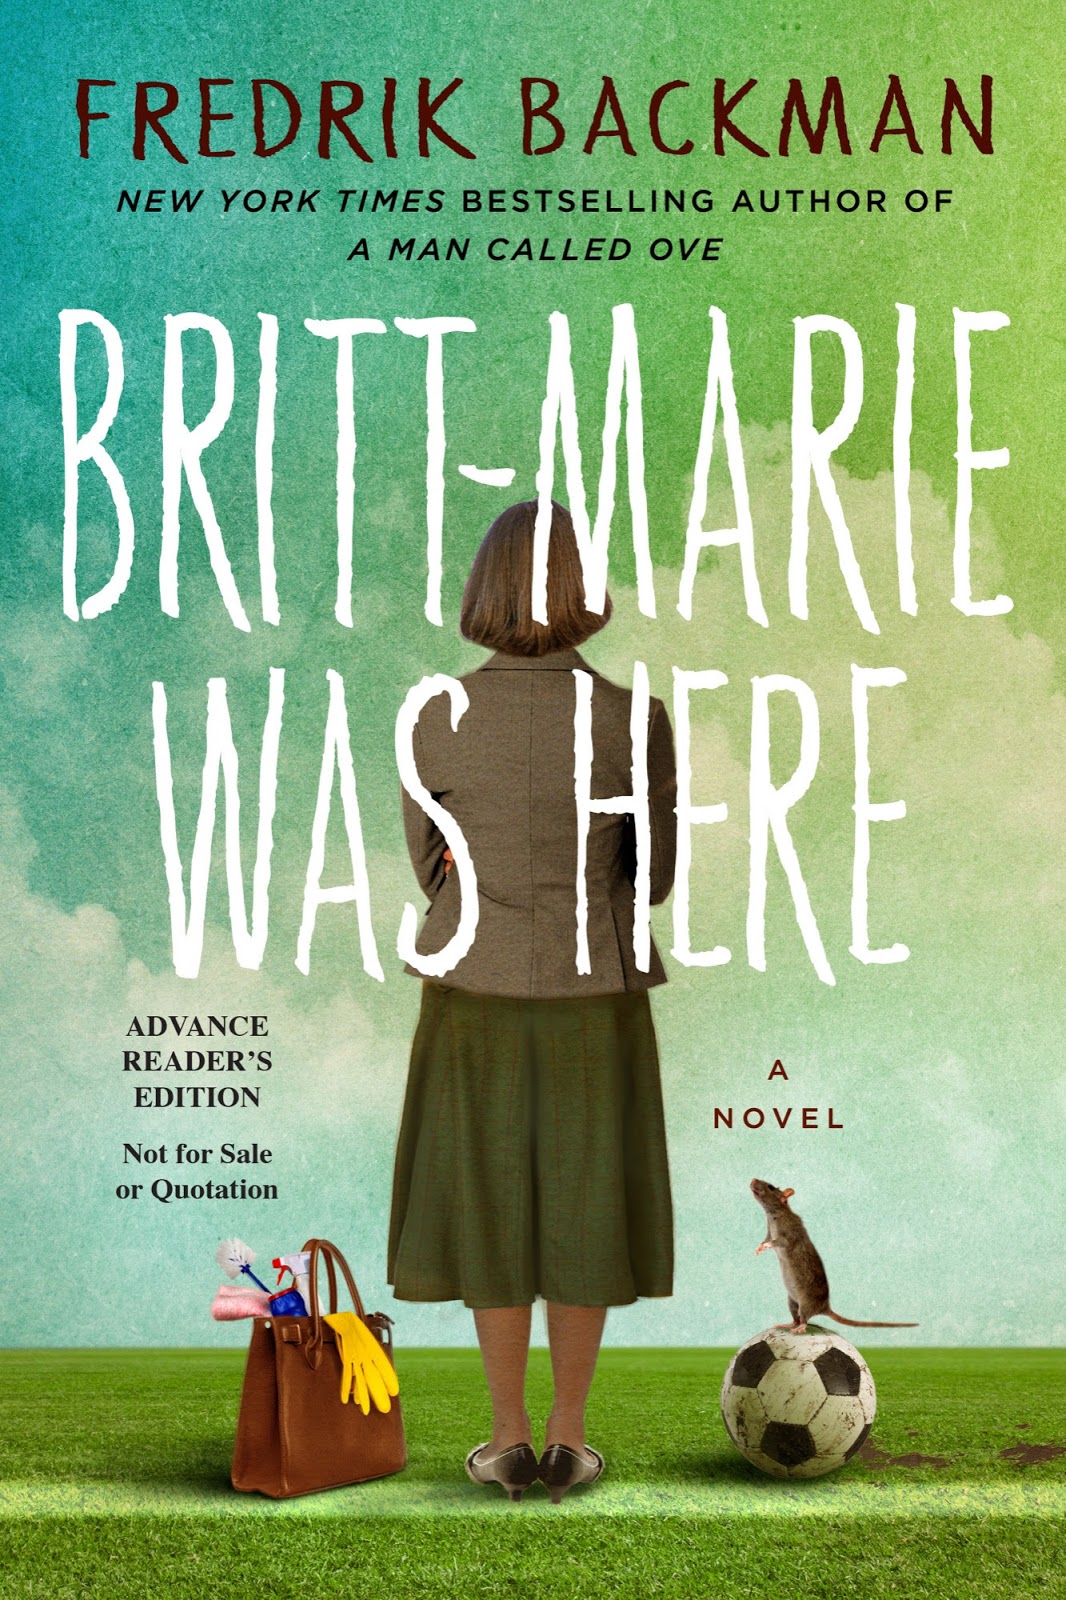 Britt-Marie was here (2016)